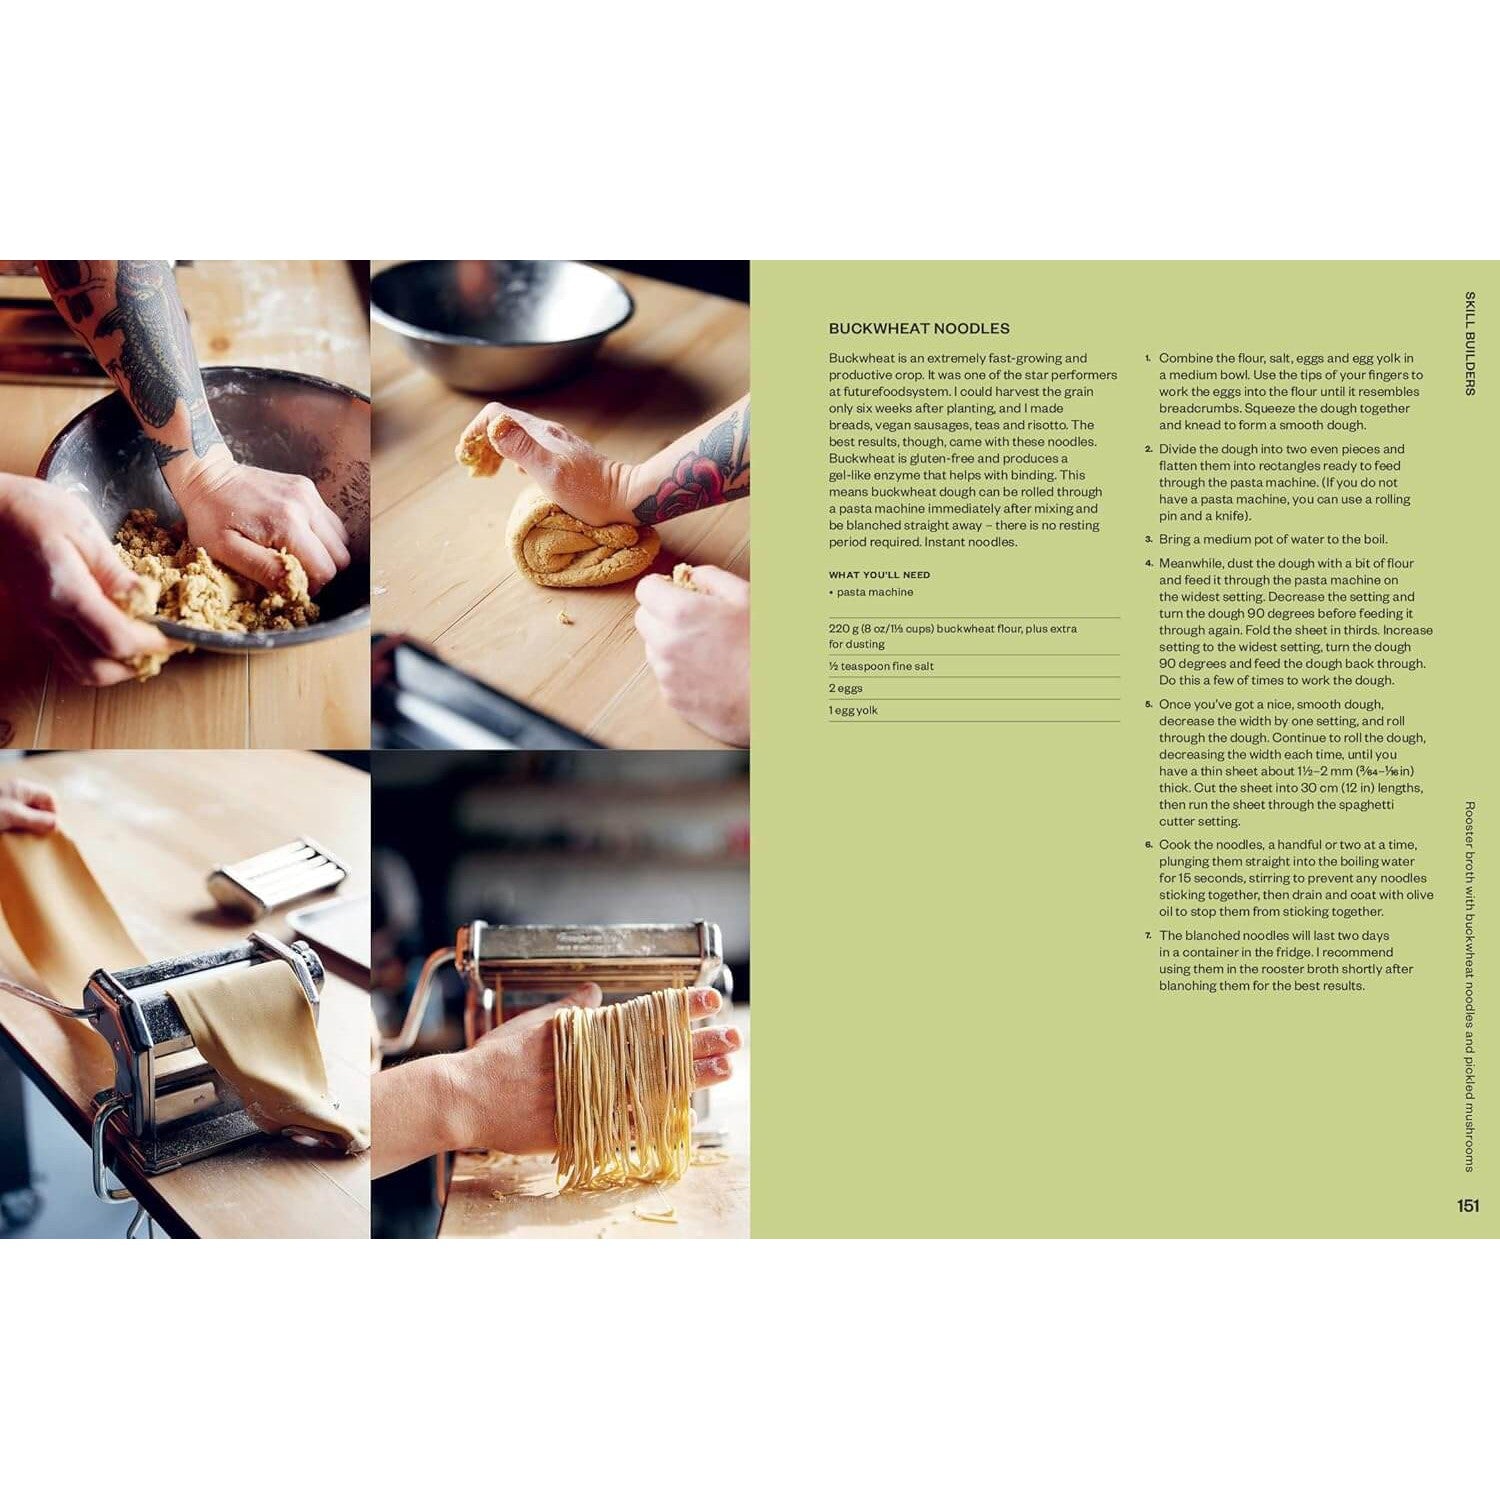 Sustain: Groundbreaking Recipes & Skills